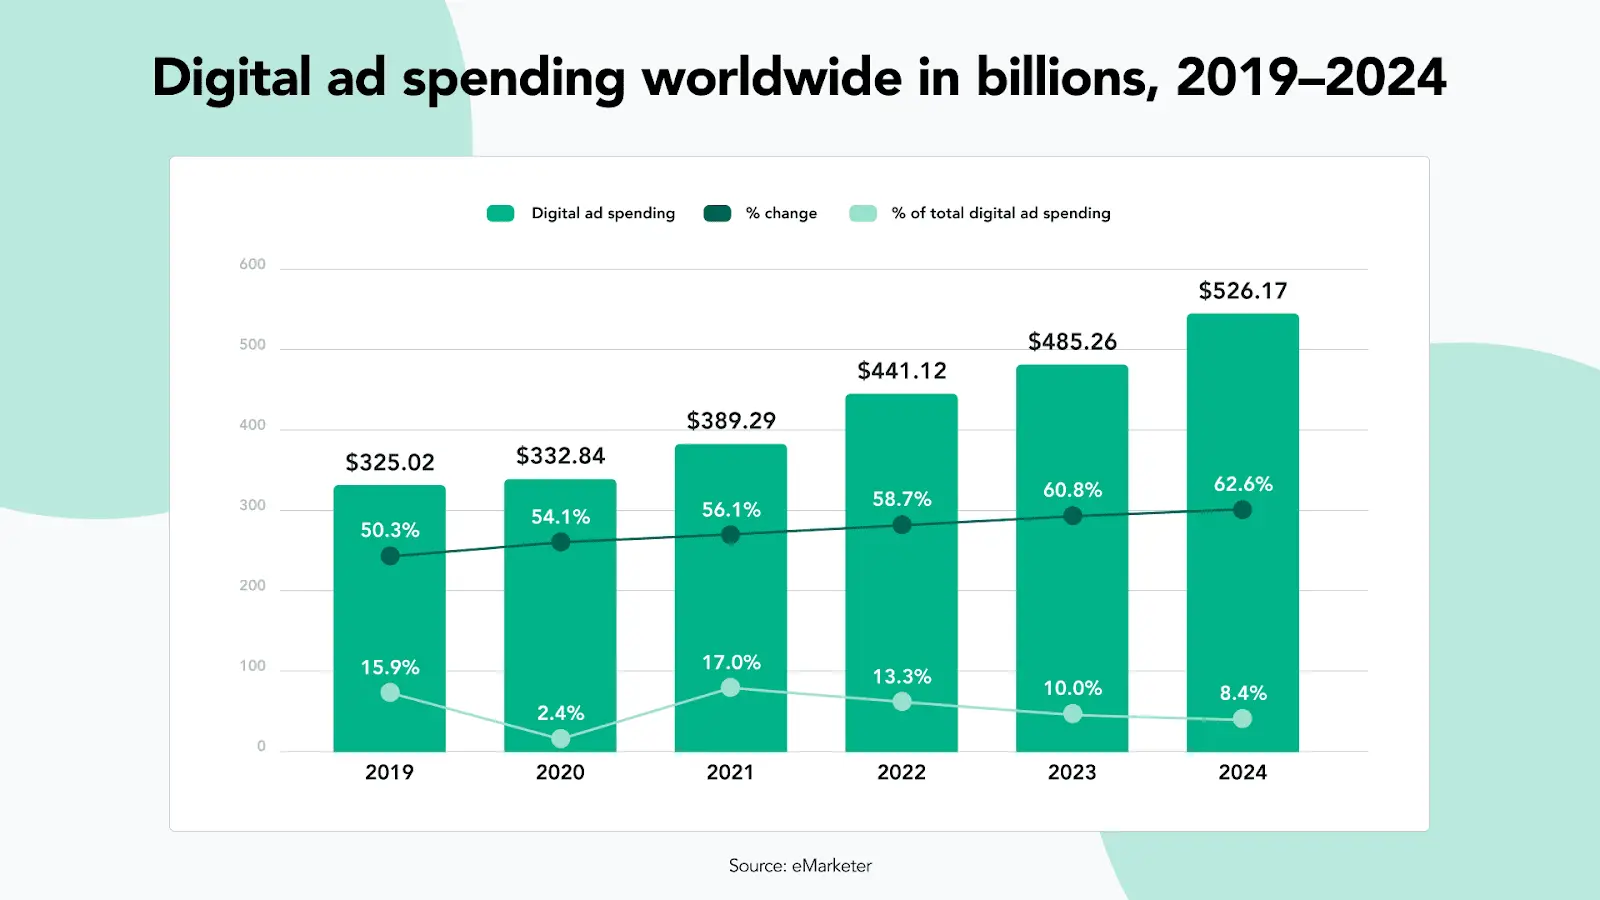 Digital ad spending